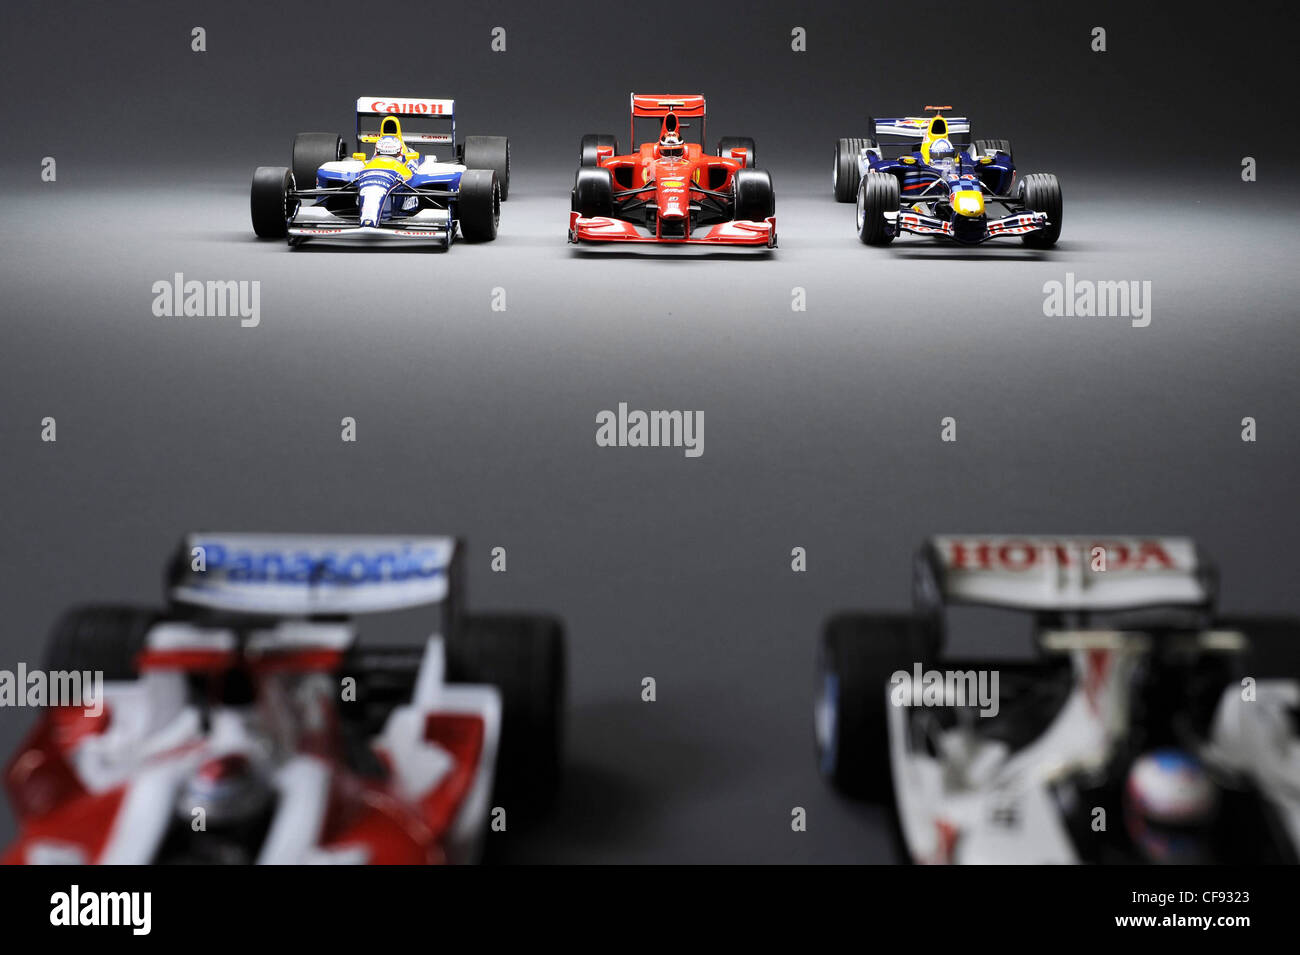 Car, Automobile, running, Ferrari, model, Renault, Mercedes, formula 1, Stock Photo